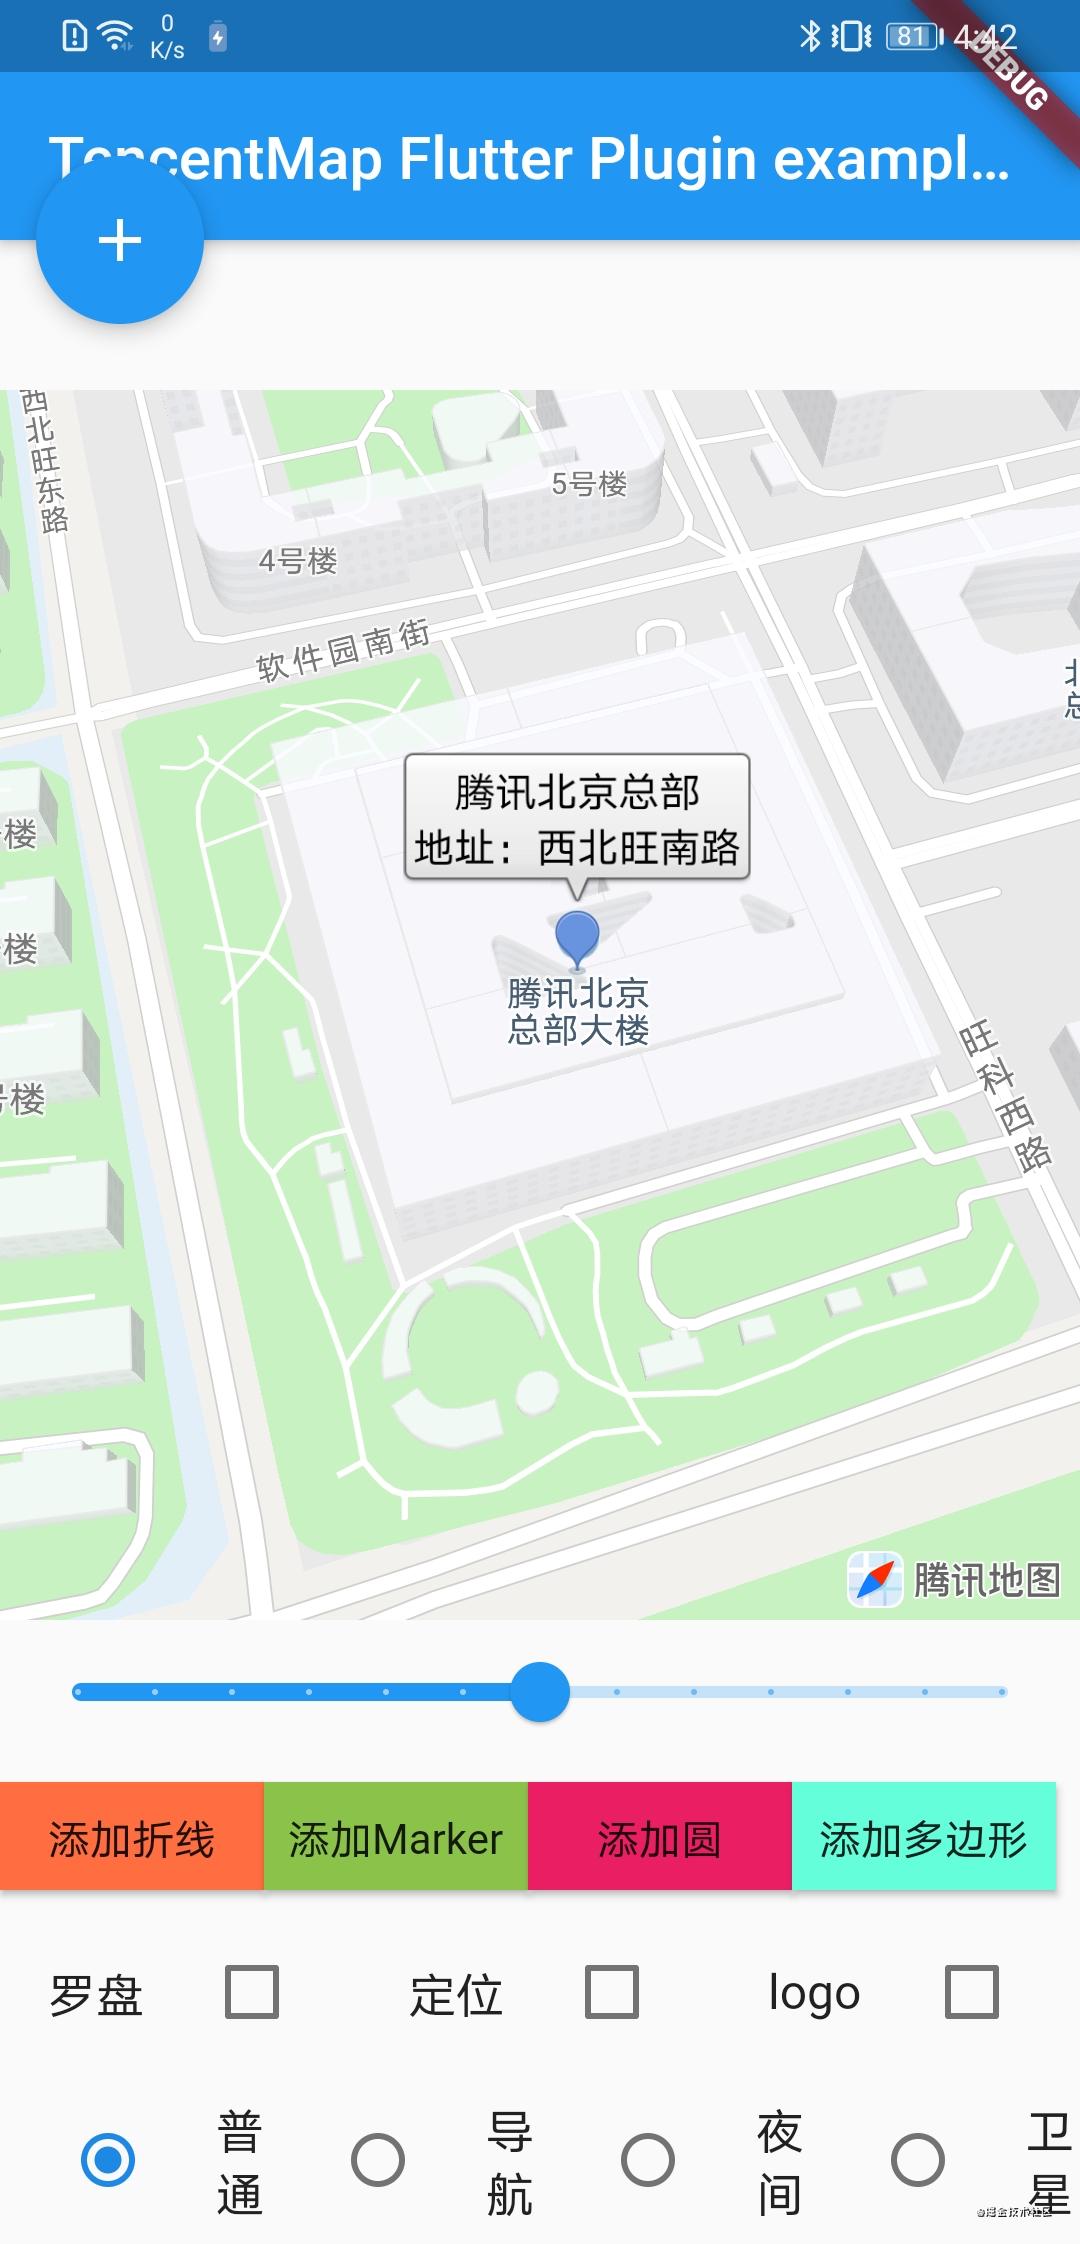 Screenshot_20210324_164210_com.tencent.tencentmap_example.jpg